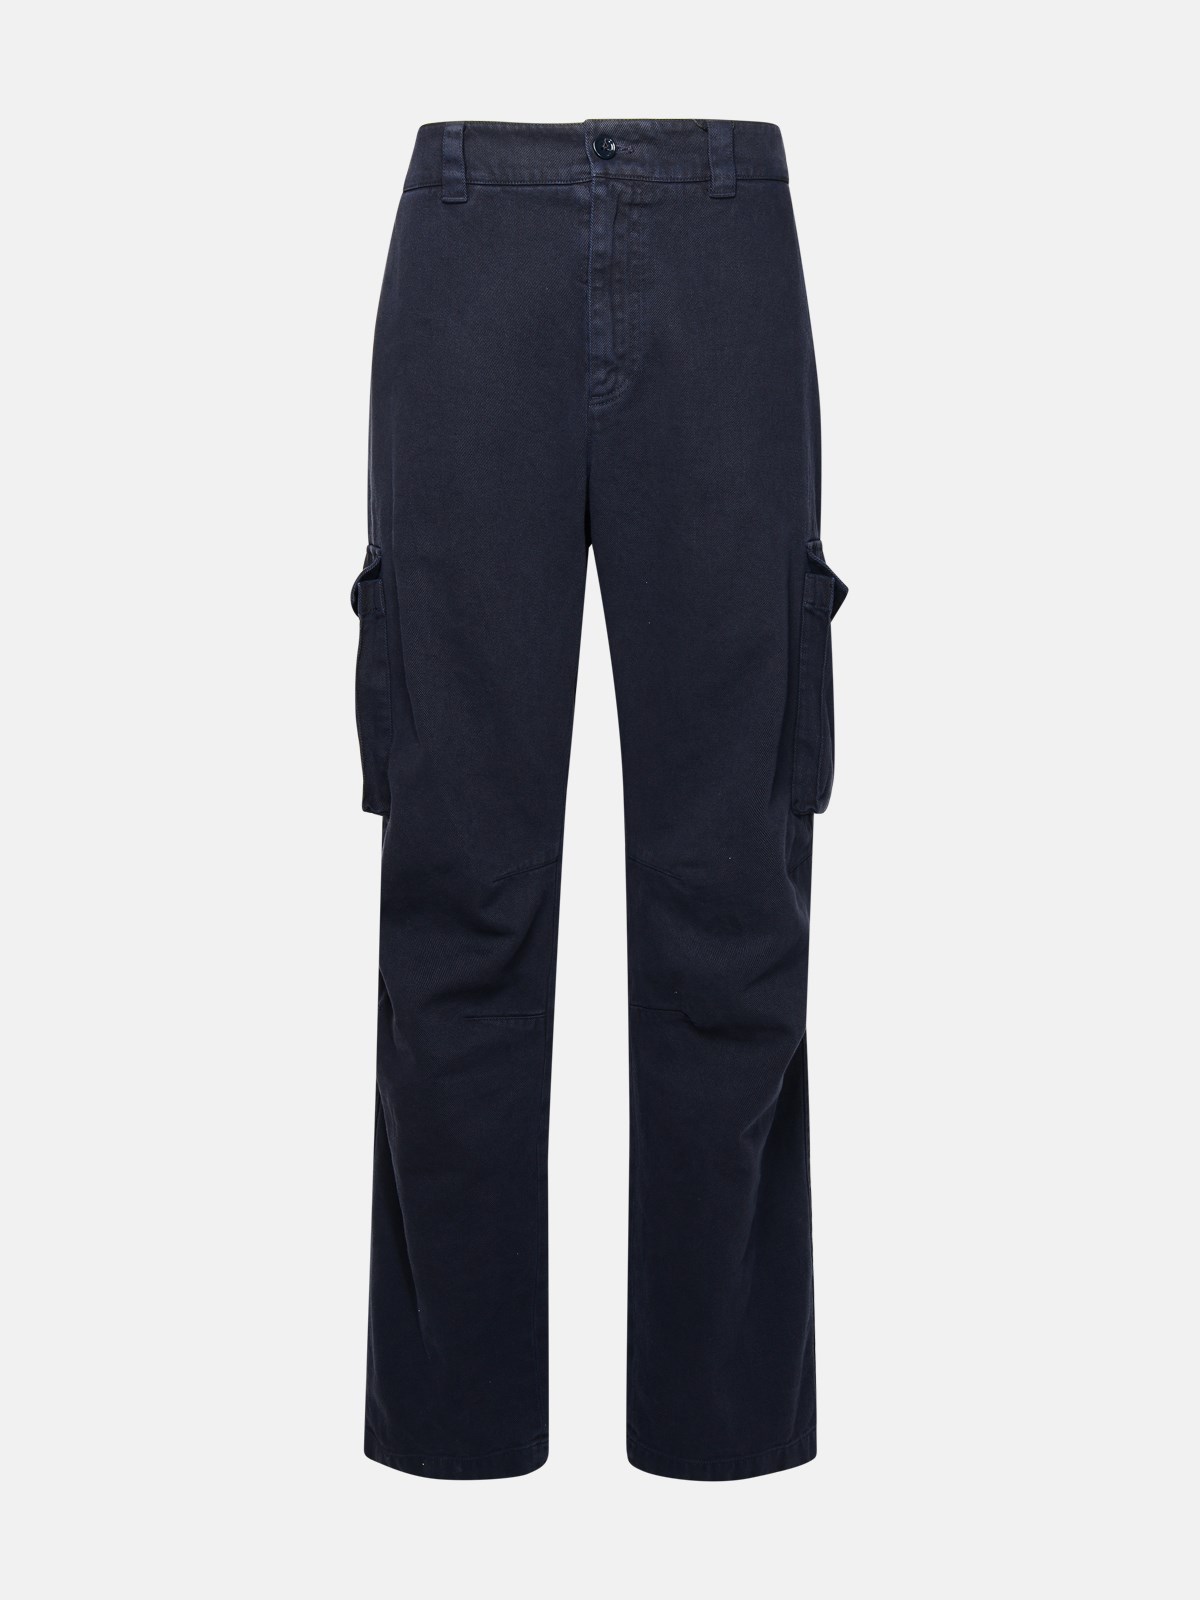 Dolce & Gabbana Navy Cotton Cargo Pants